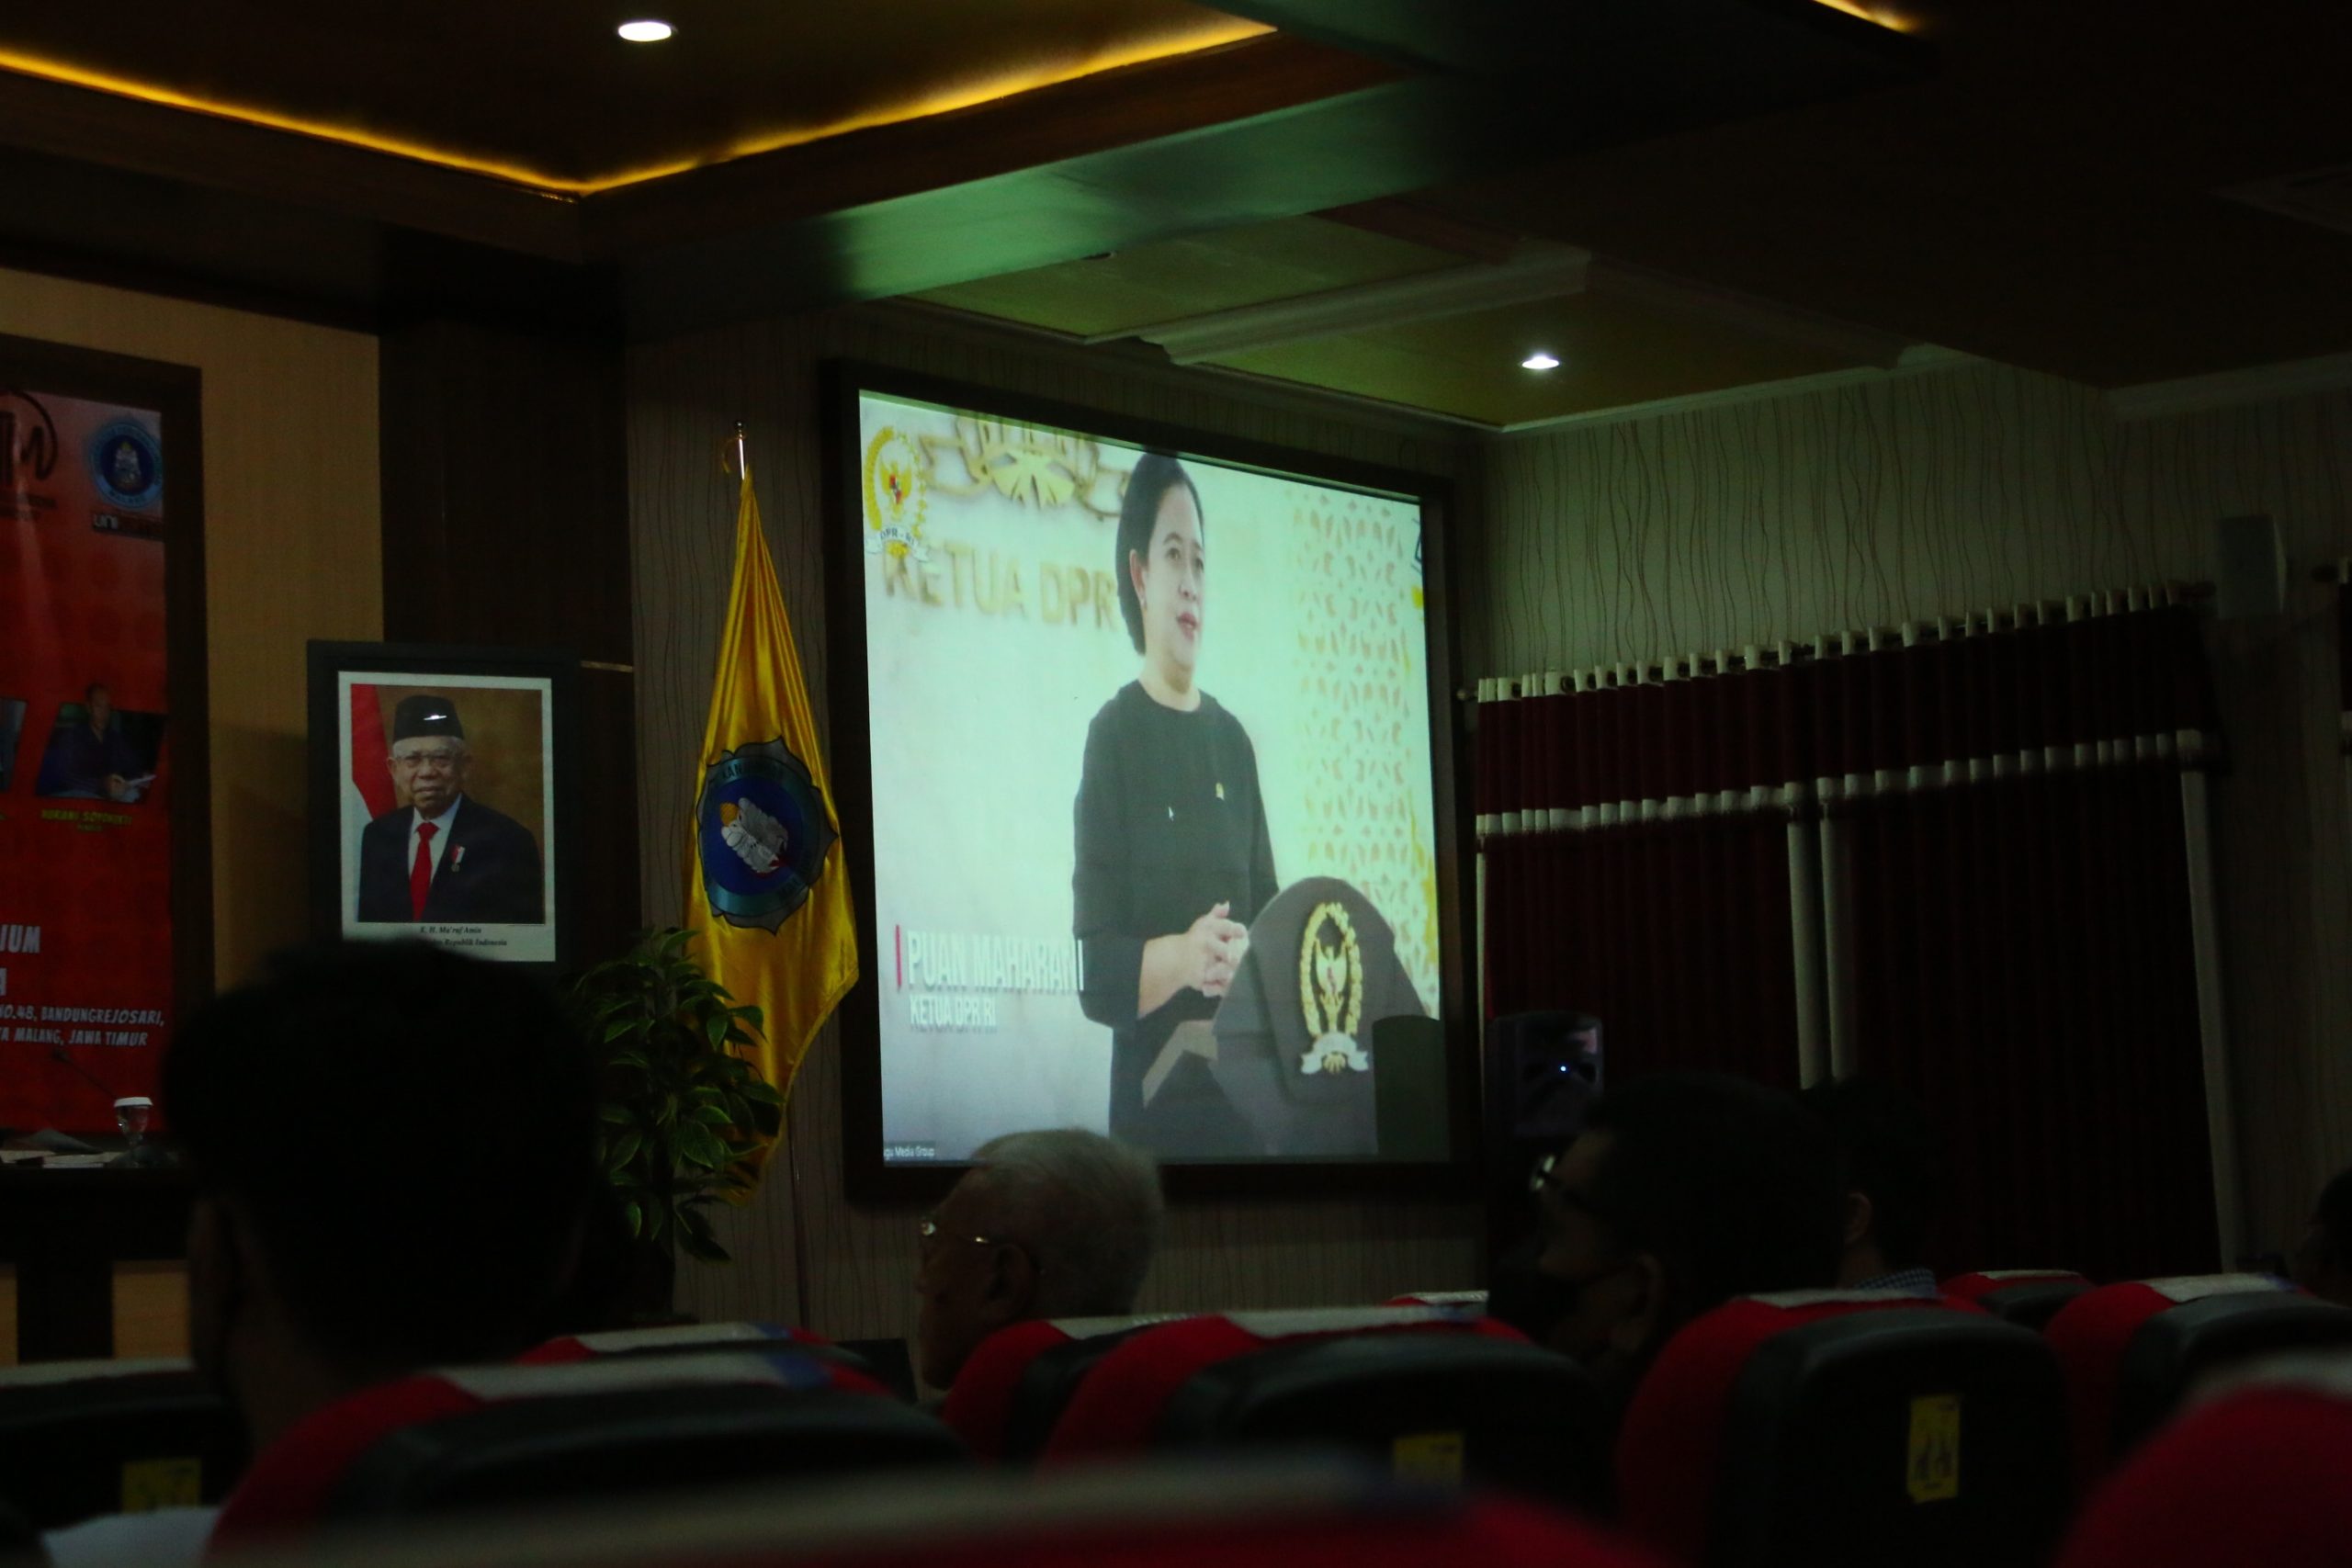 Cucu Bung Karno sekaligus Ketua DPR RI, Puan Maharani memberikan pemaparan dalam Haul Bung Karno ke-52 di Universitas PGRI Kanjuruhan Malang secara virtual.